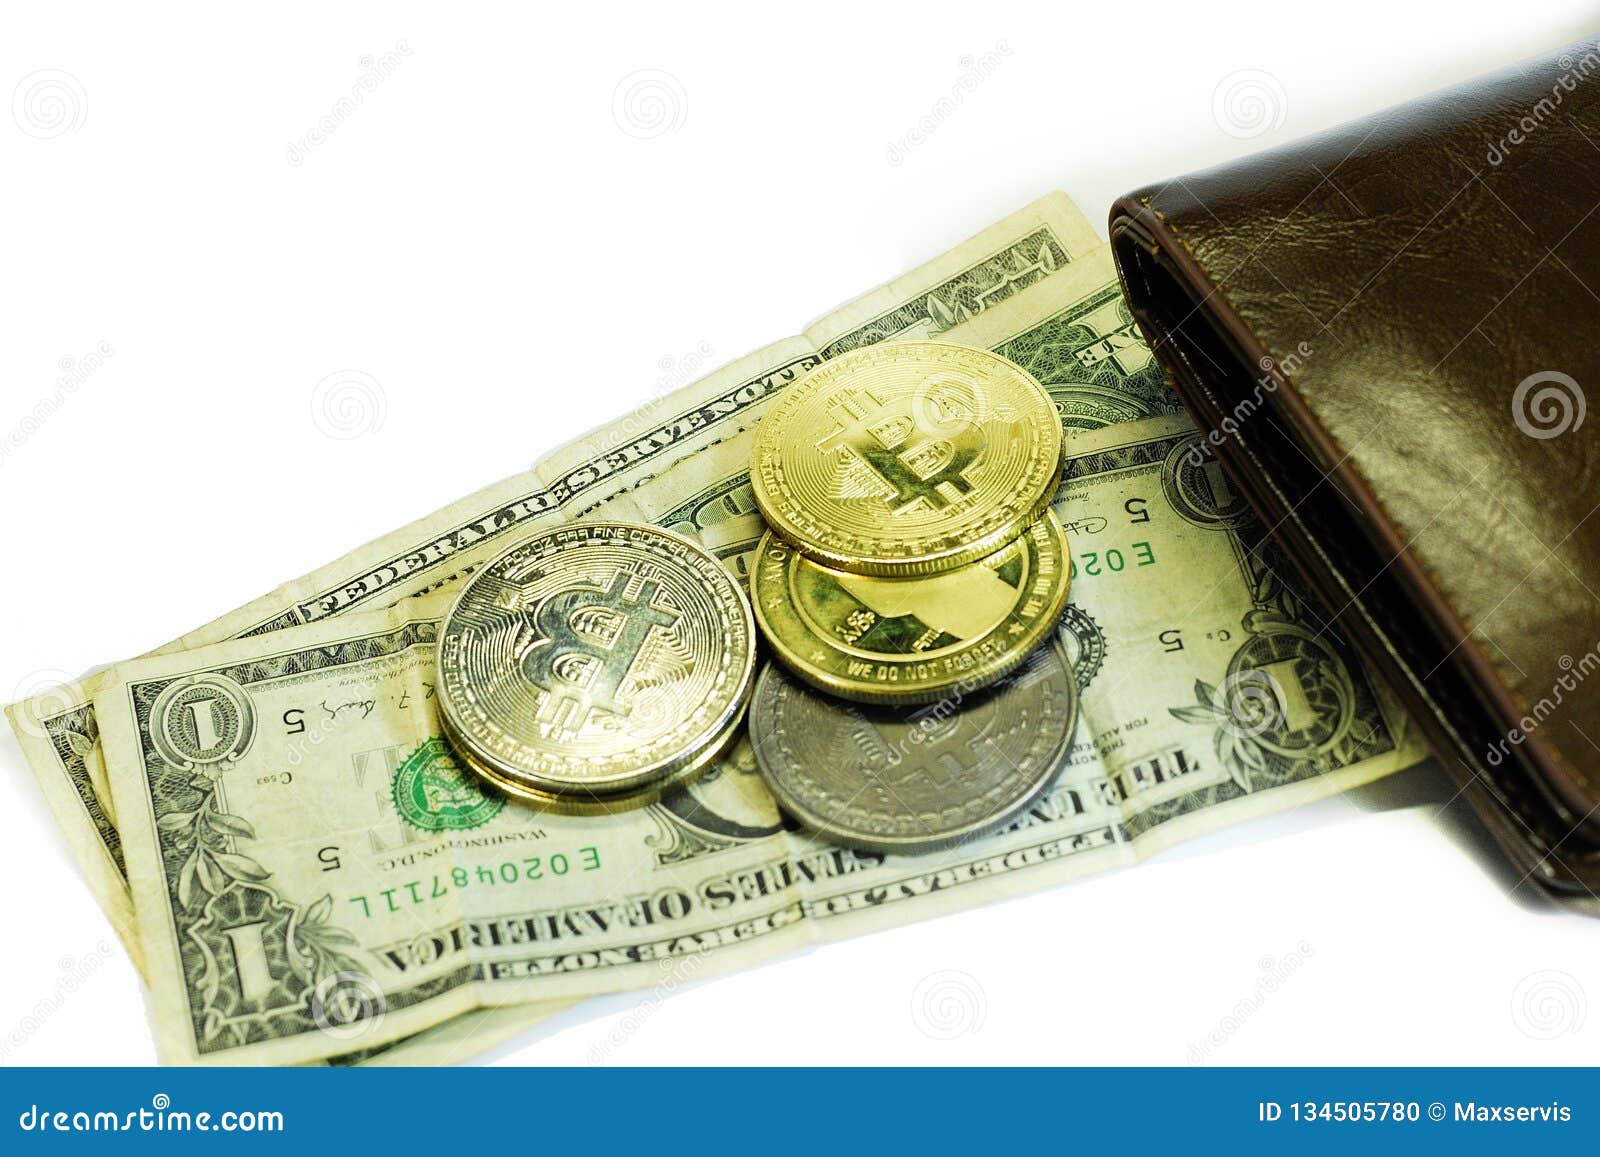 Money Laundering Bitcoin Wallet Stock Photo Image Of Green Bill - 